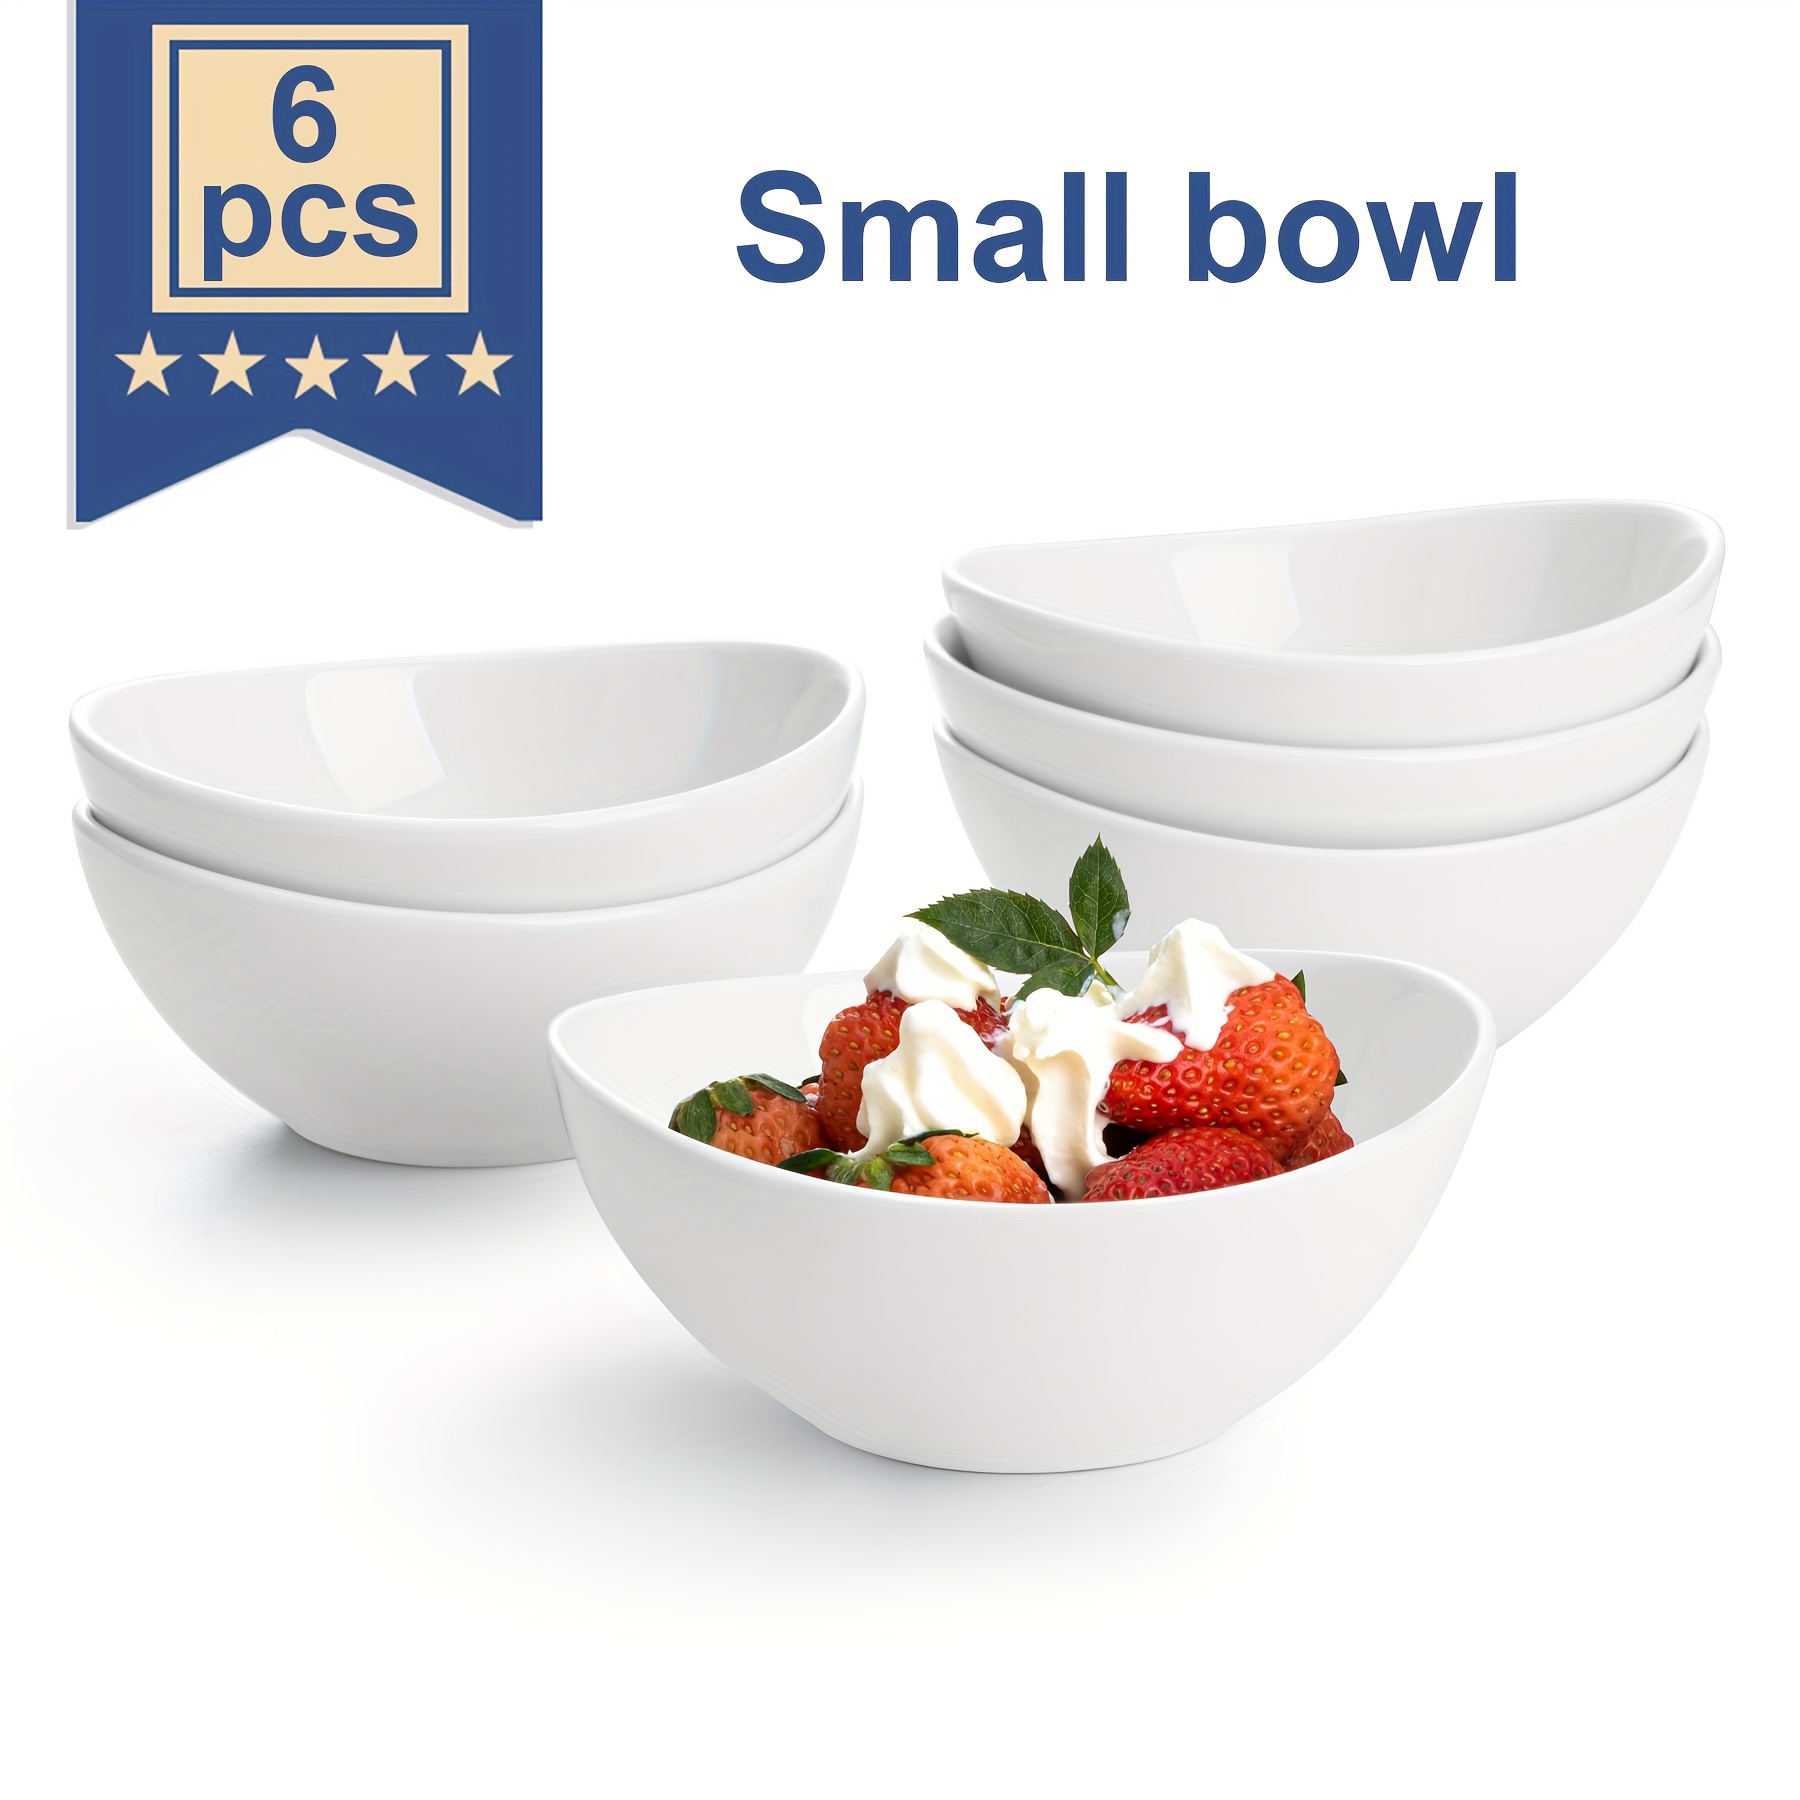 6pcs Handmade Small Ceramic Prep Bowls for Dips, Snack Sauce